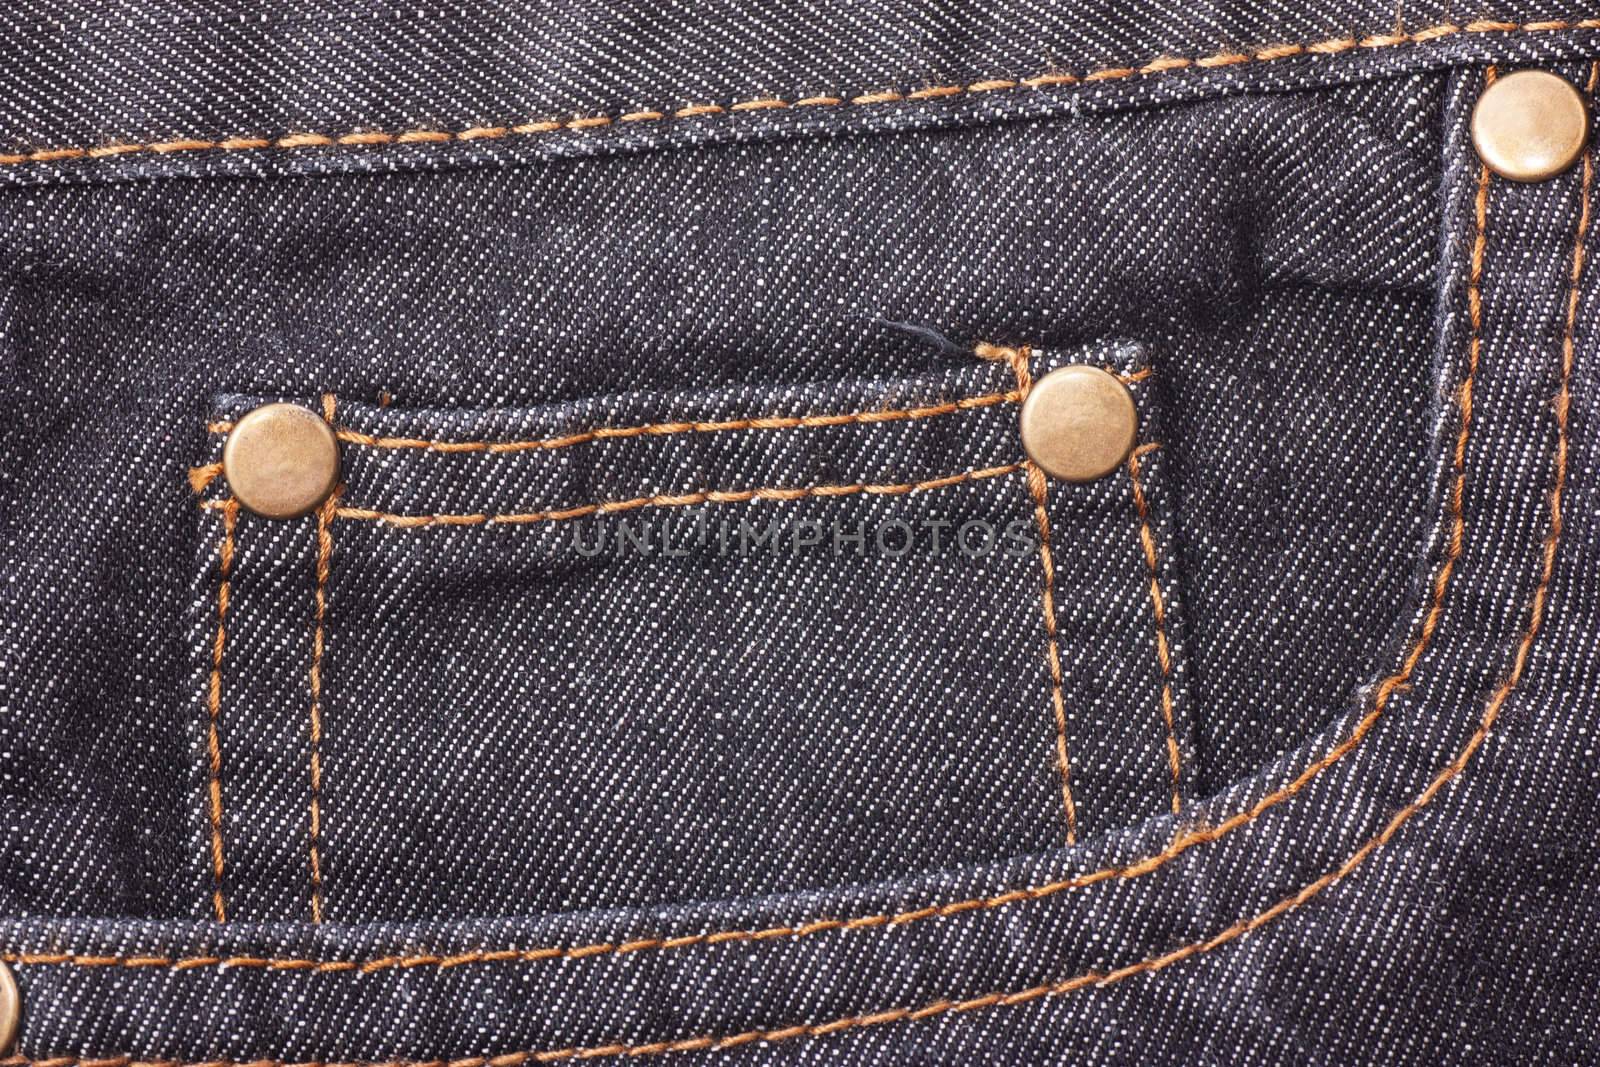 Closeup view of denim pocket.